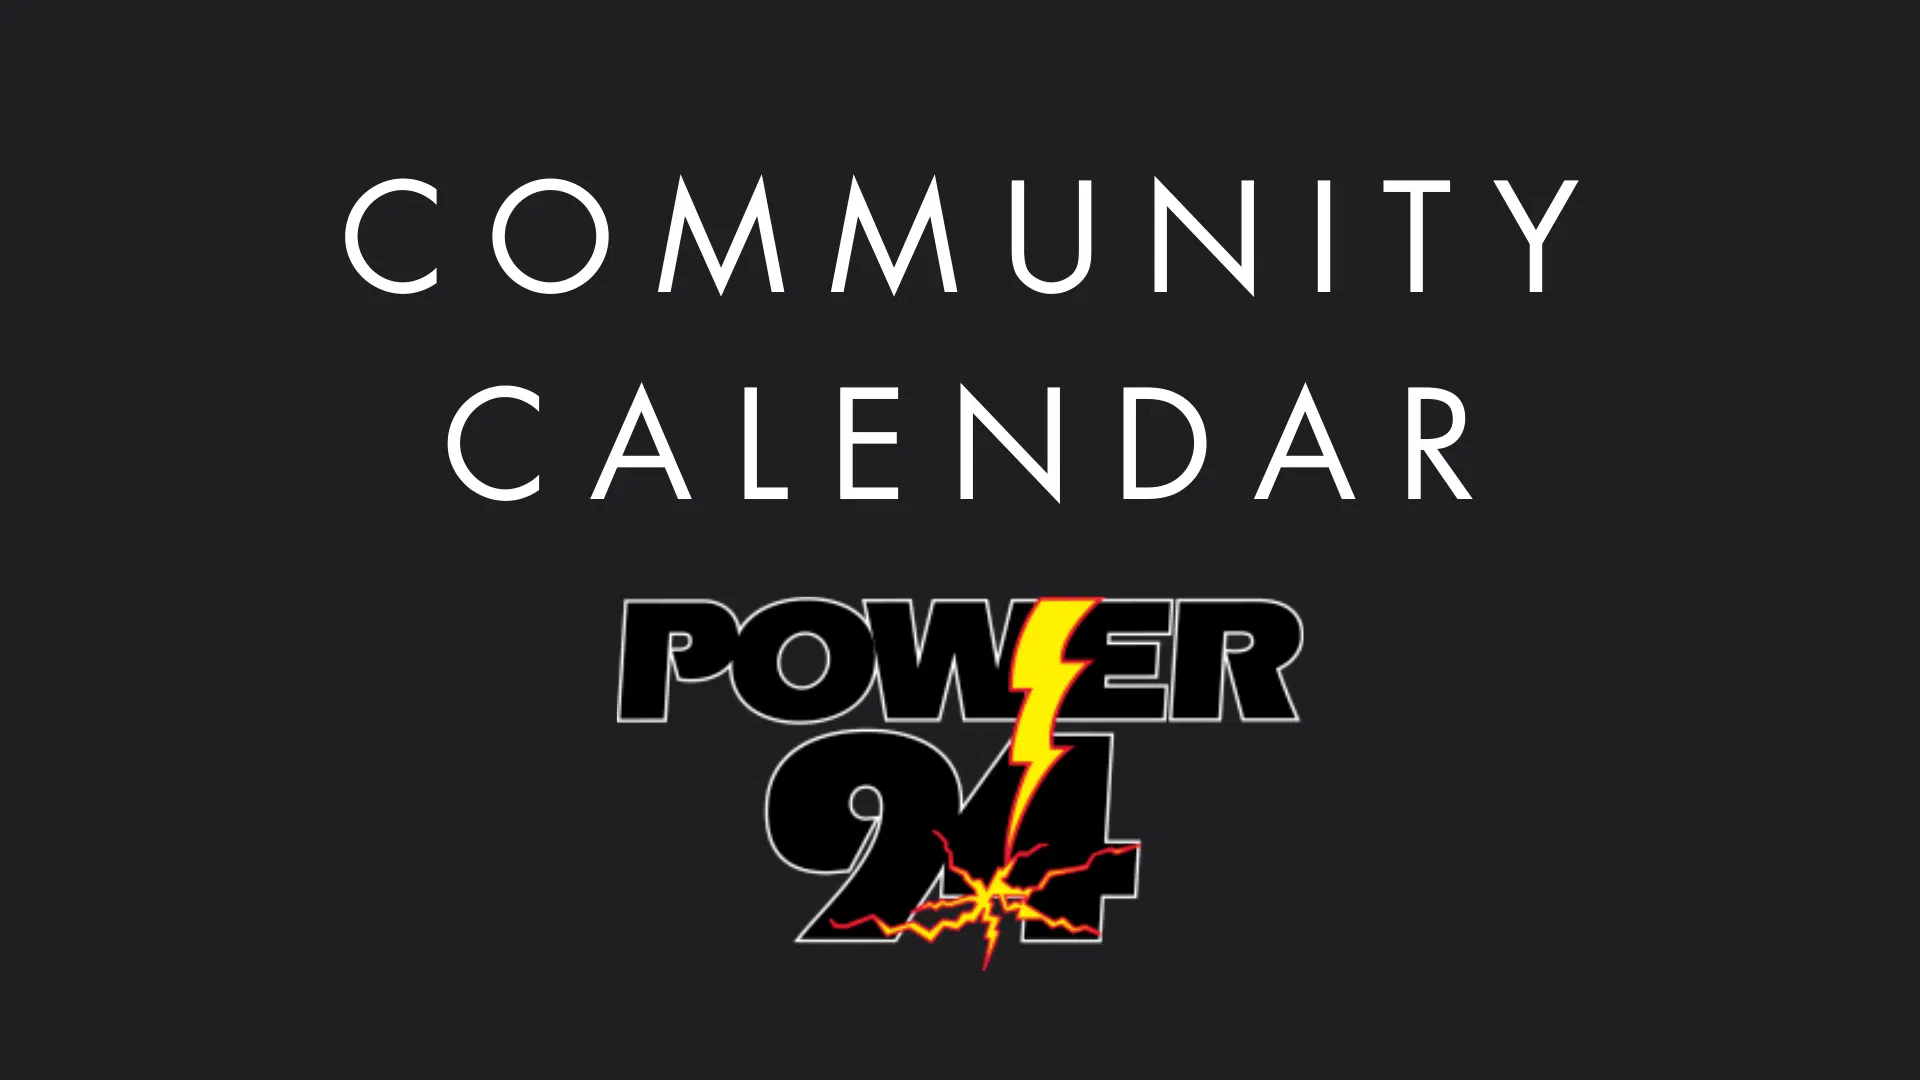 Feature: https://power94.com/community-calendar/